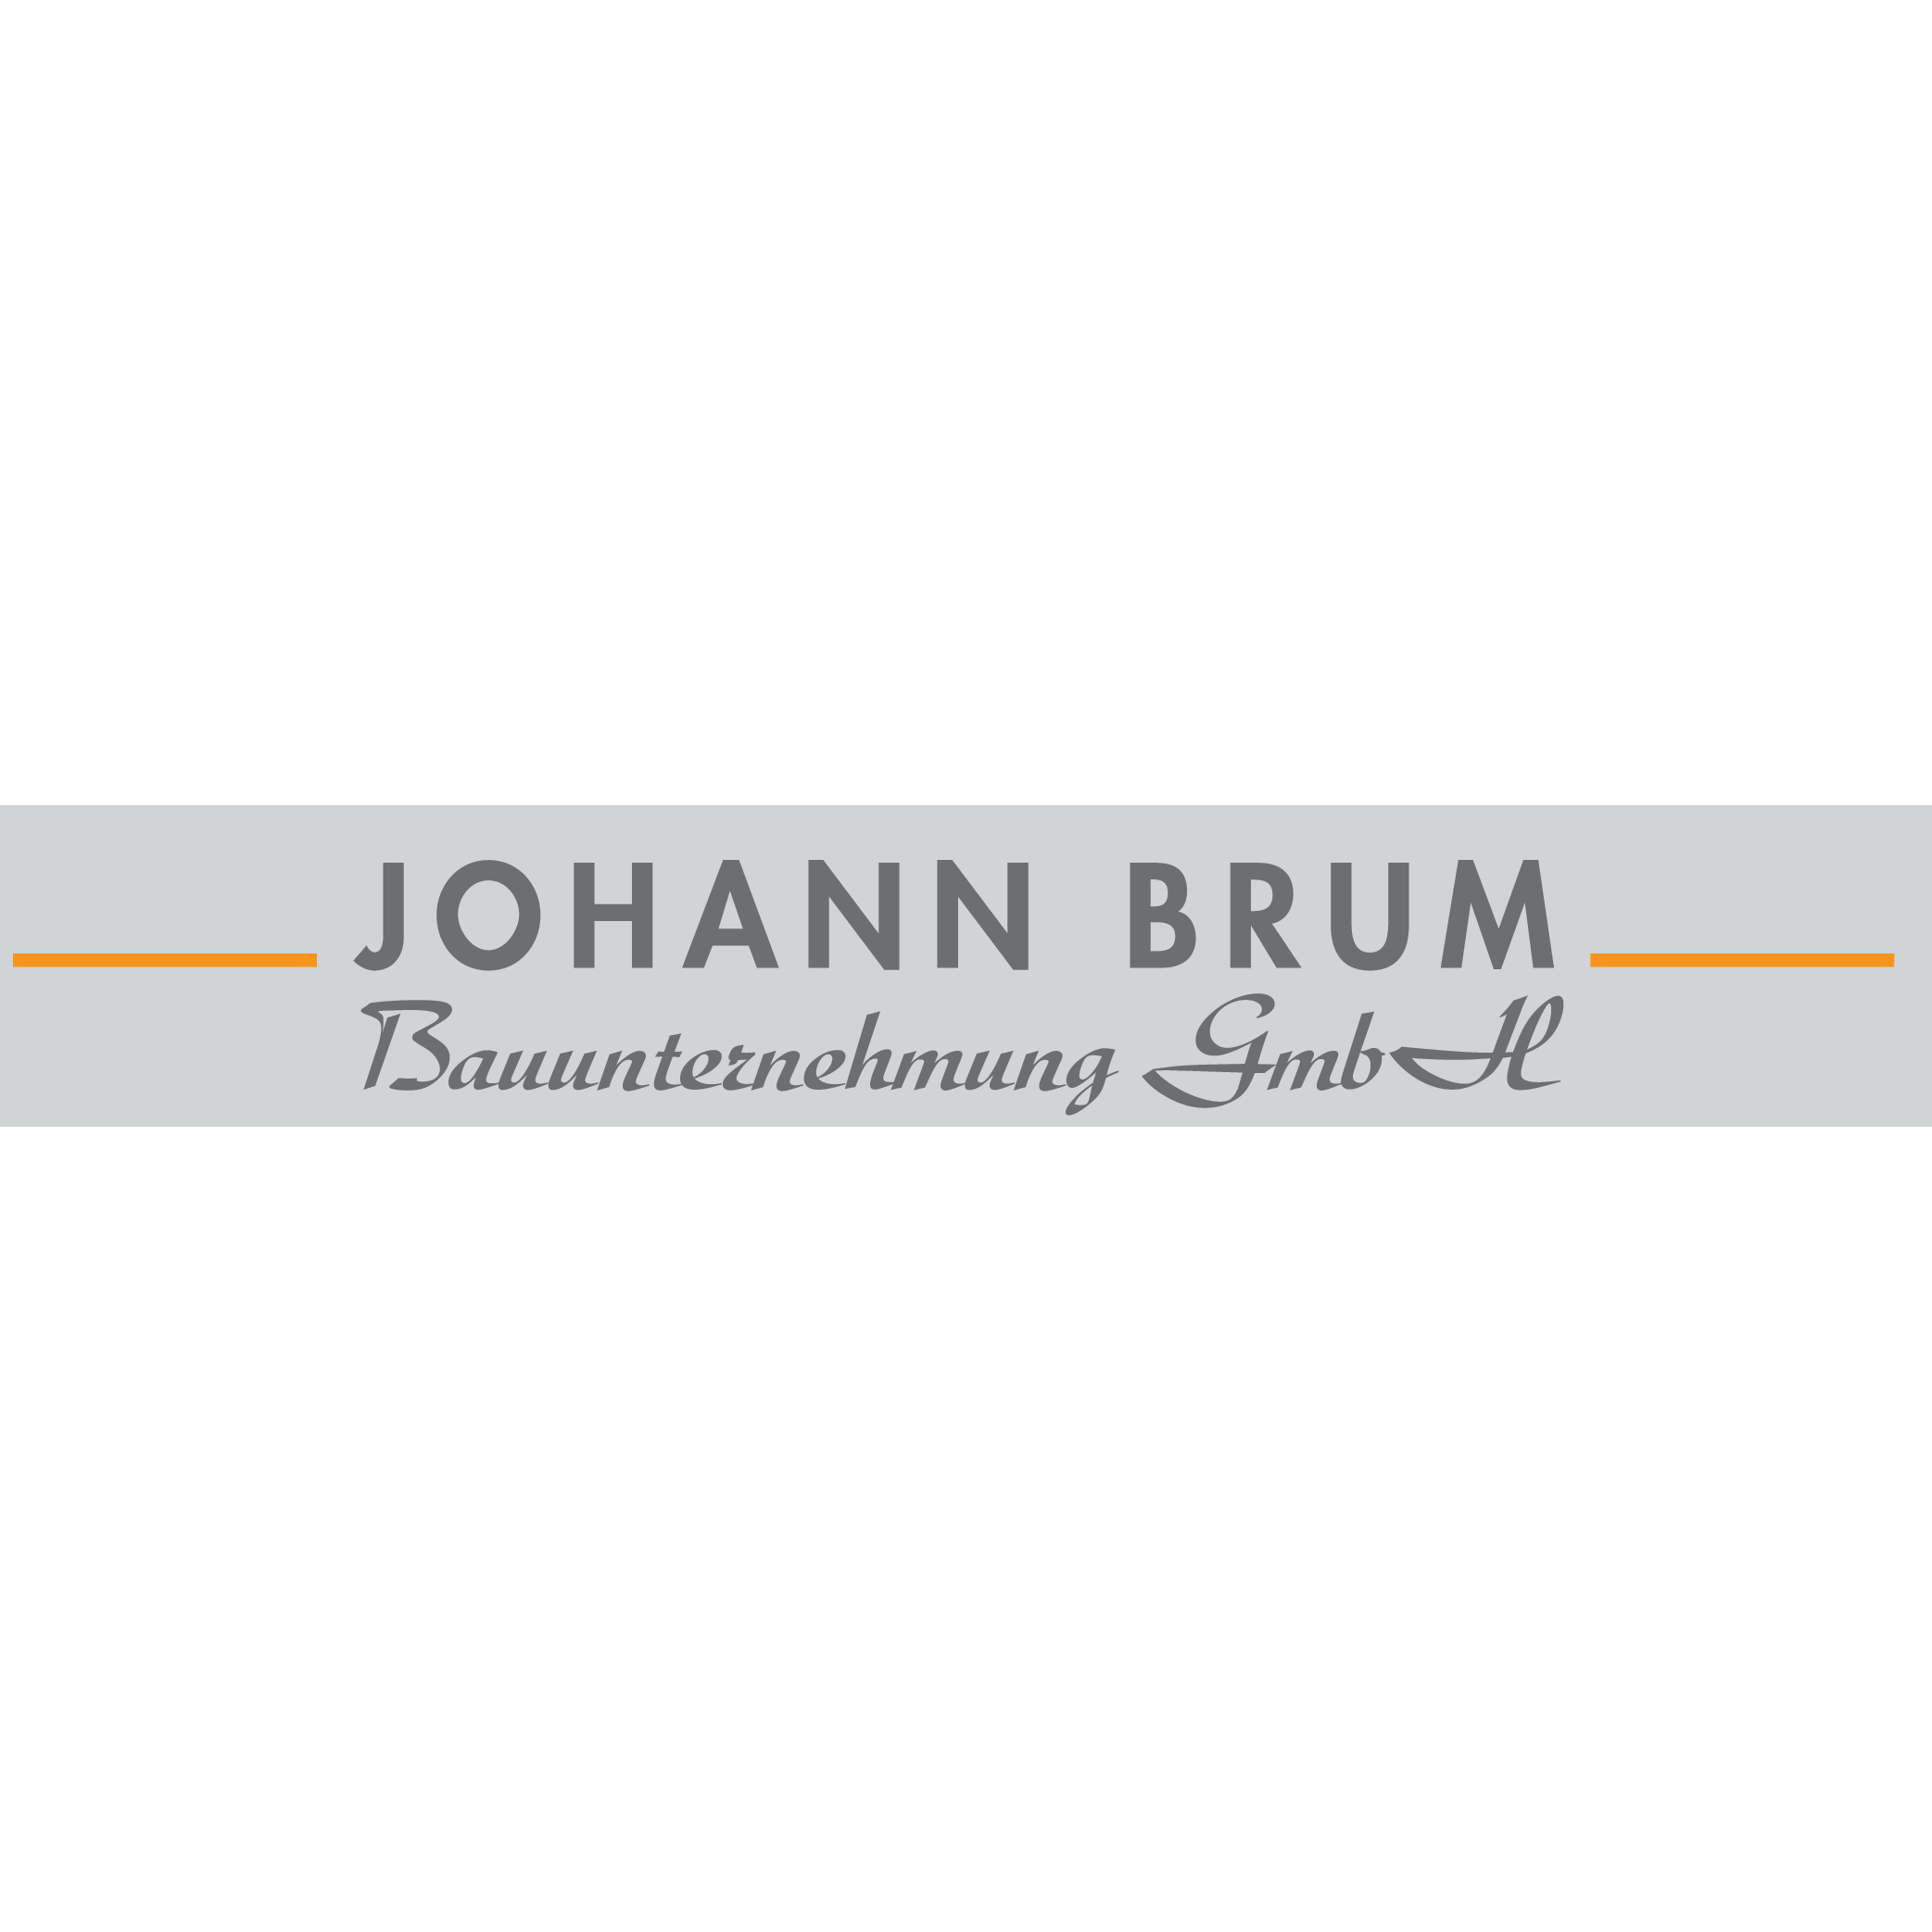 Bauunternehmung GmbH Johann Brum in Frankfurt am Main - Logo